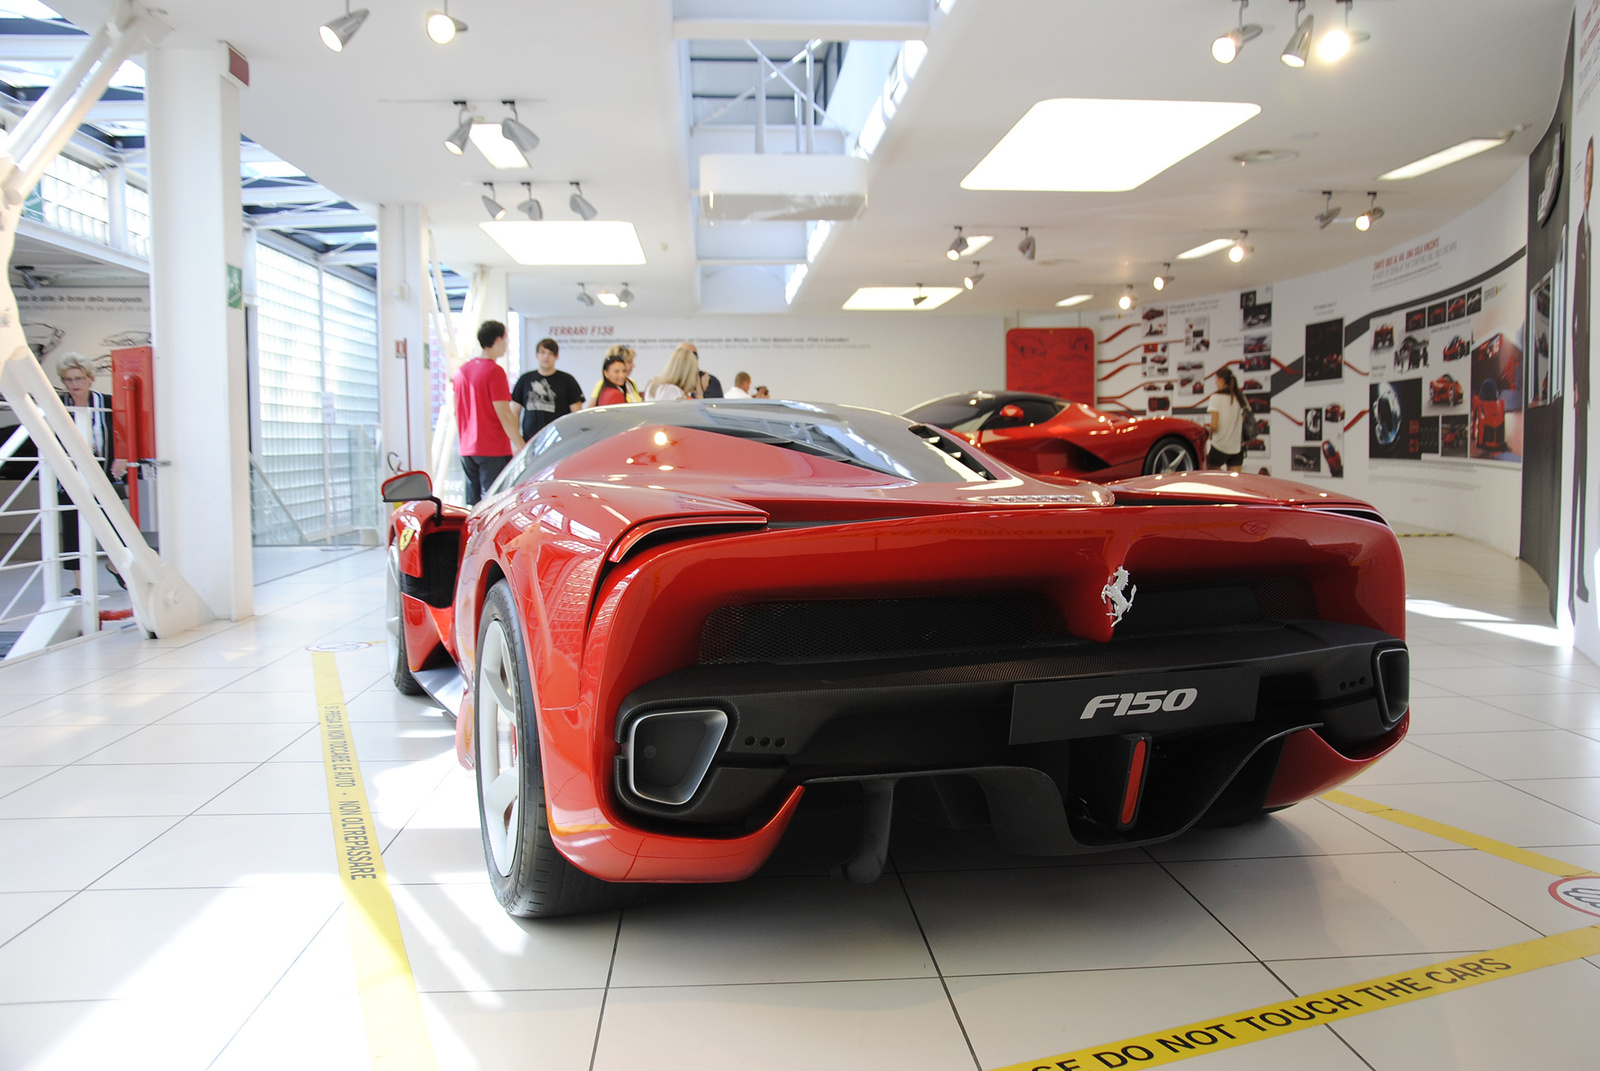 Ferrari F150 Manta